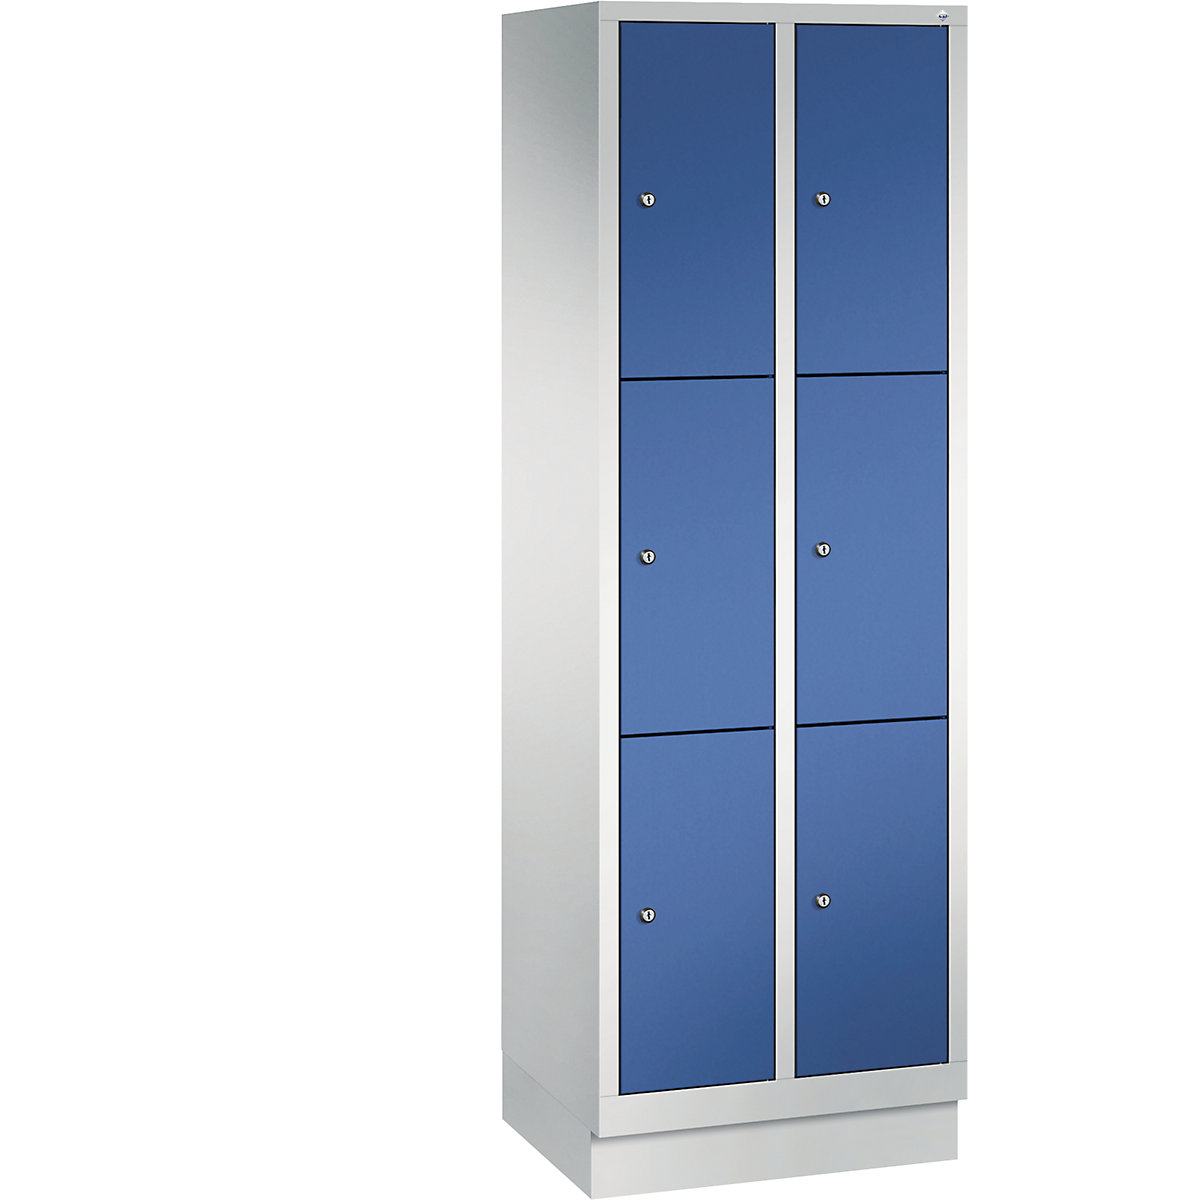 CLASSIC locker unit with plinth – C+P, 2 compartments, 3 shelf compartments each, compartment width 300 mm, light grey / gentian blue-10